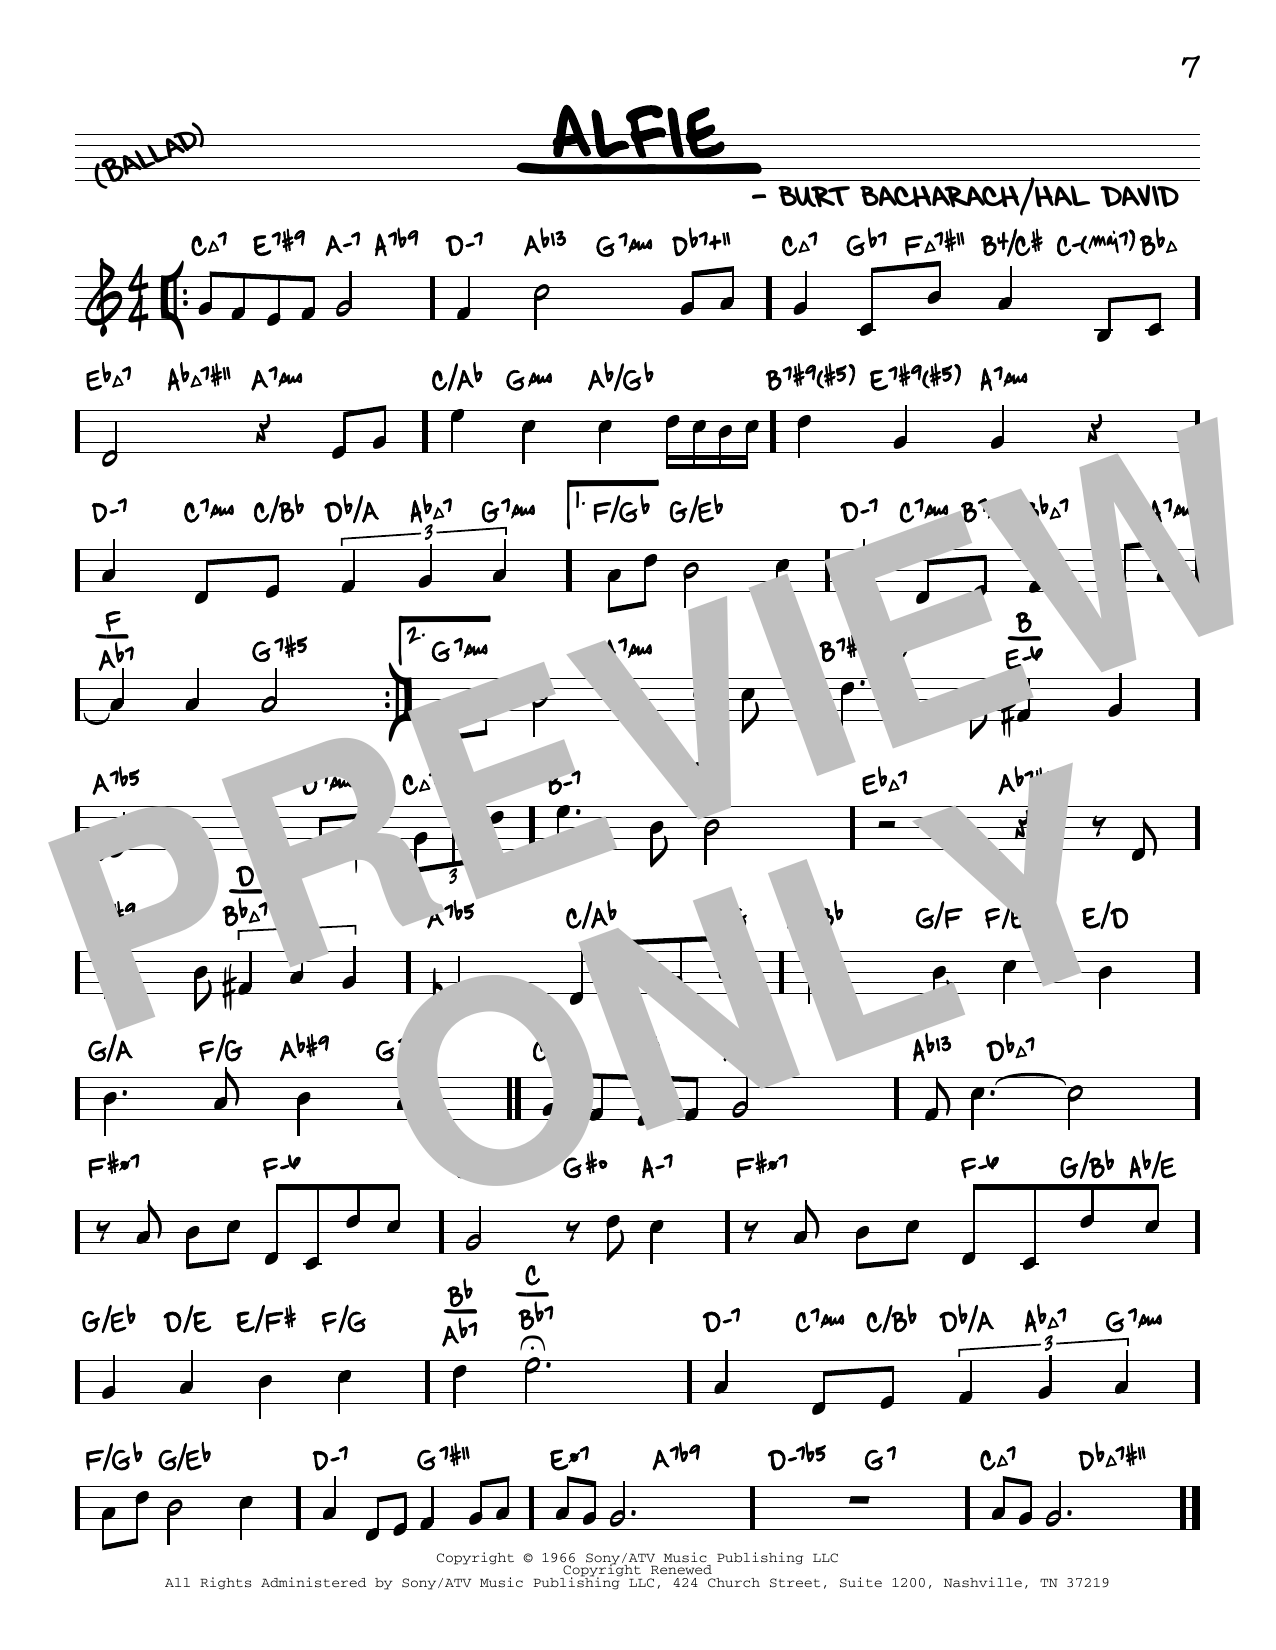 Bacharach & David Alfie (arr. David Hazeltine) Sheet Music Notes & Chords for Real Book – Enhanced Chords - Download or Print PDF